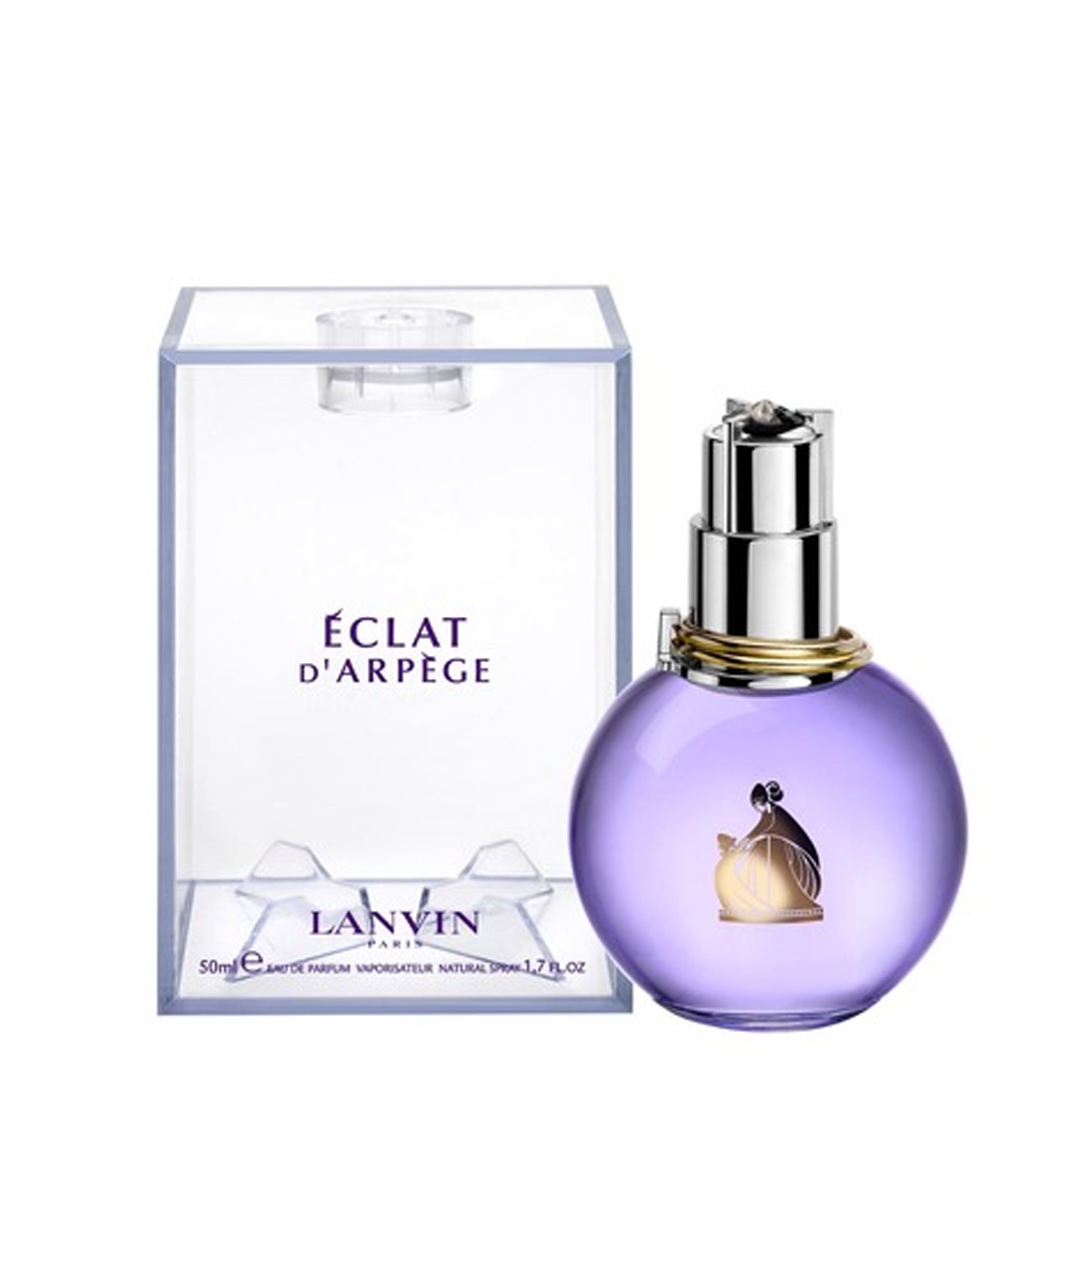 Perfume «Lanvin» Éclat d'Arpège, for women, 50 ml